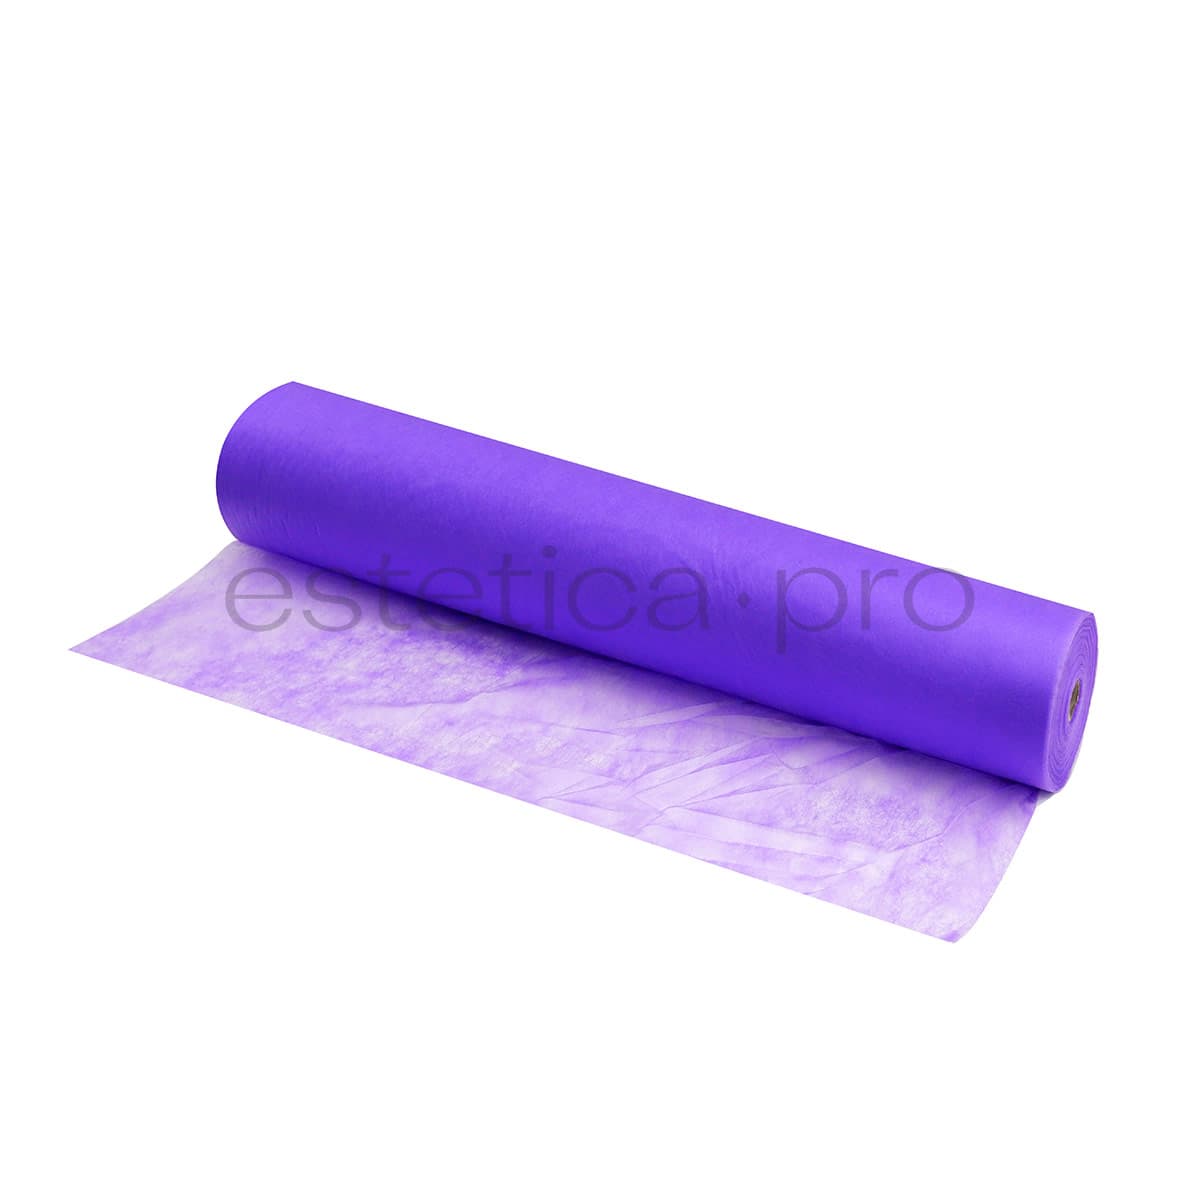 Простынь одноразовая 70*200,SMS 20 гр/м,100 шт (рулон), цвет фиолетовый